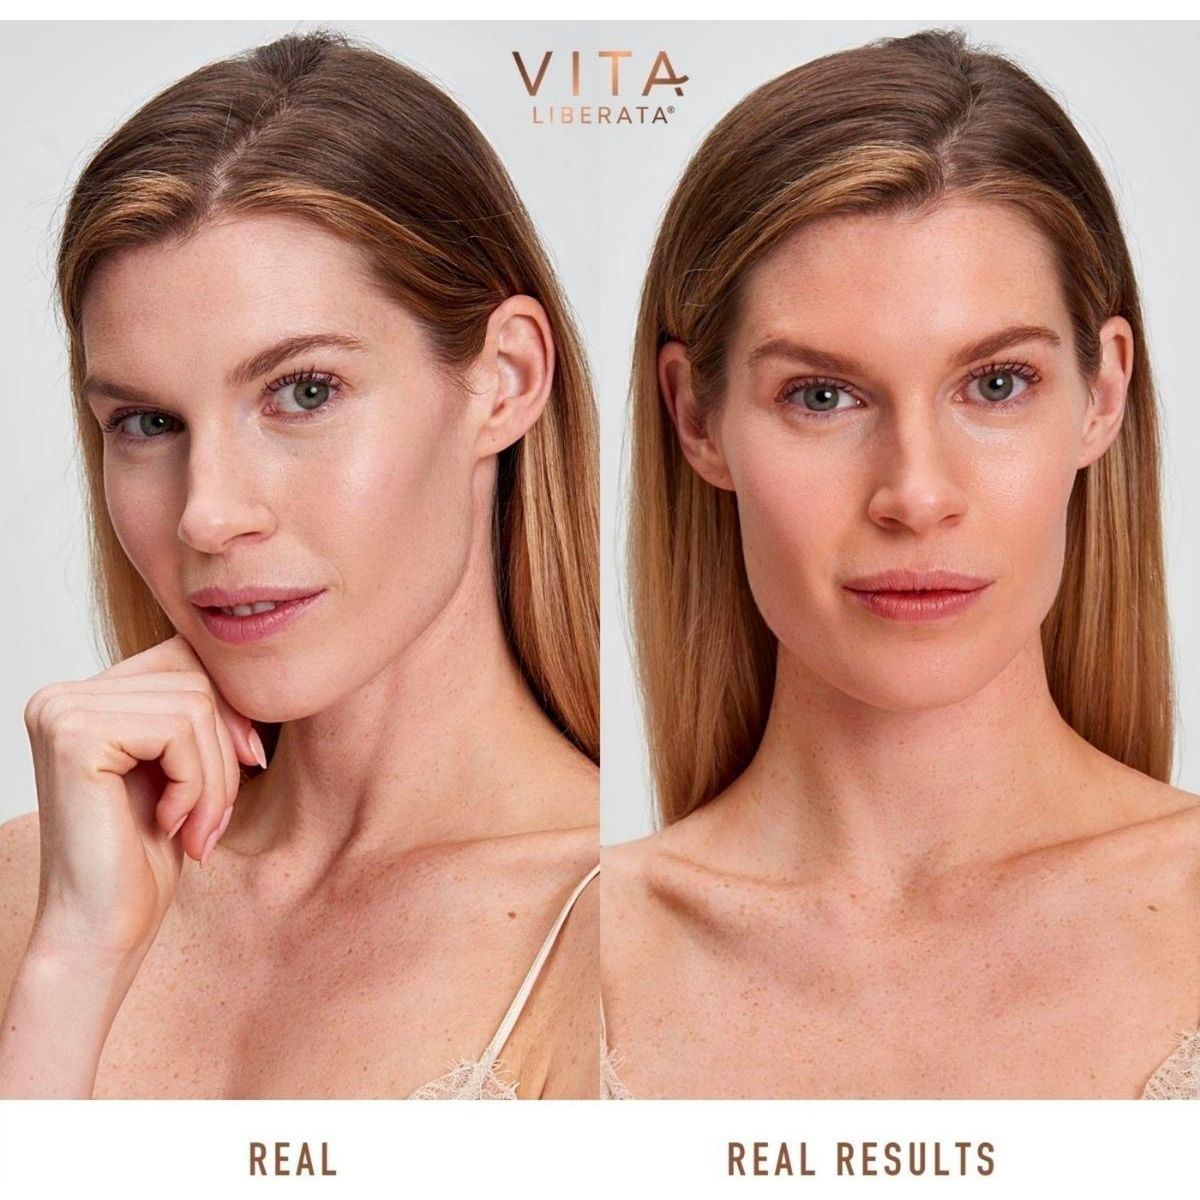 Vita Liberata | Anti-Age Face Tanning Serum | 15ml - DG International Ventures Limited